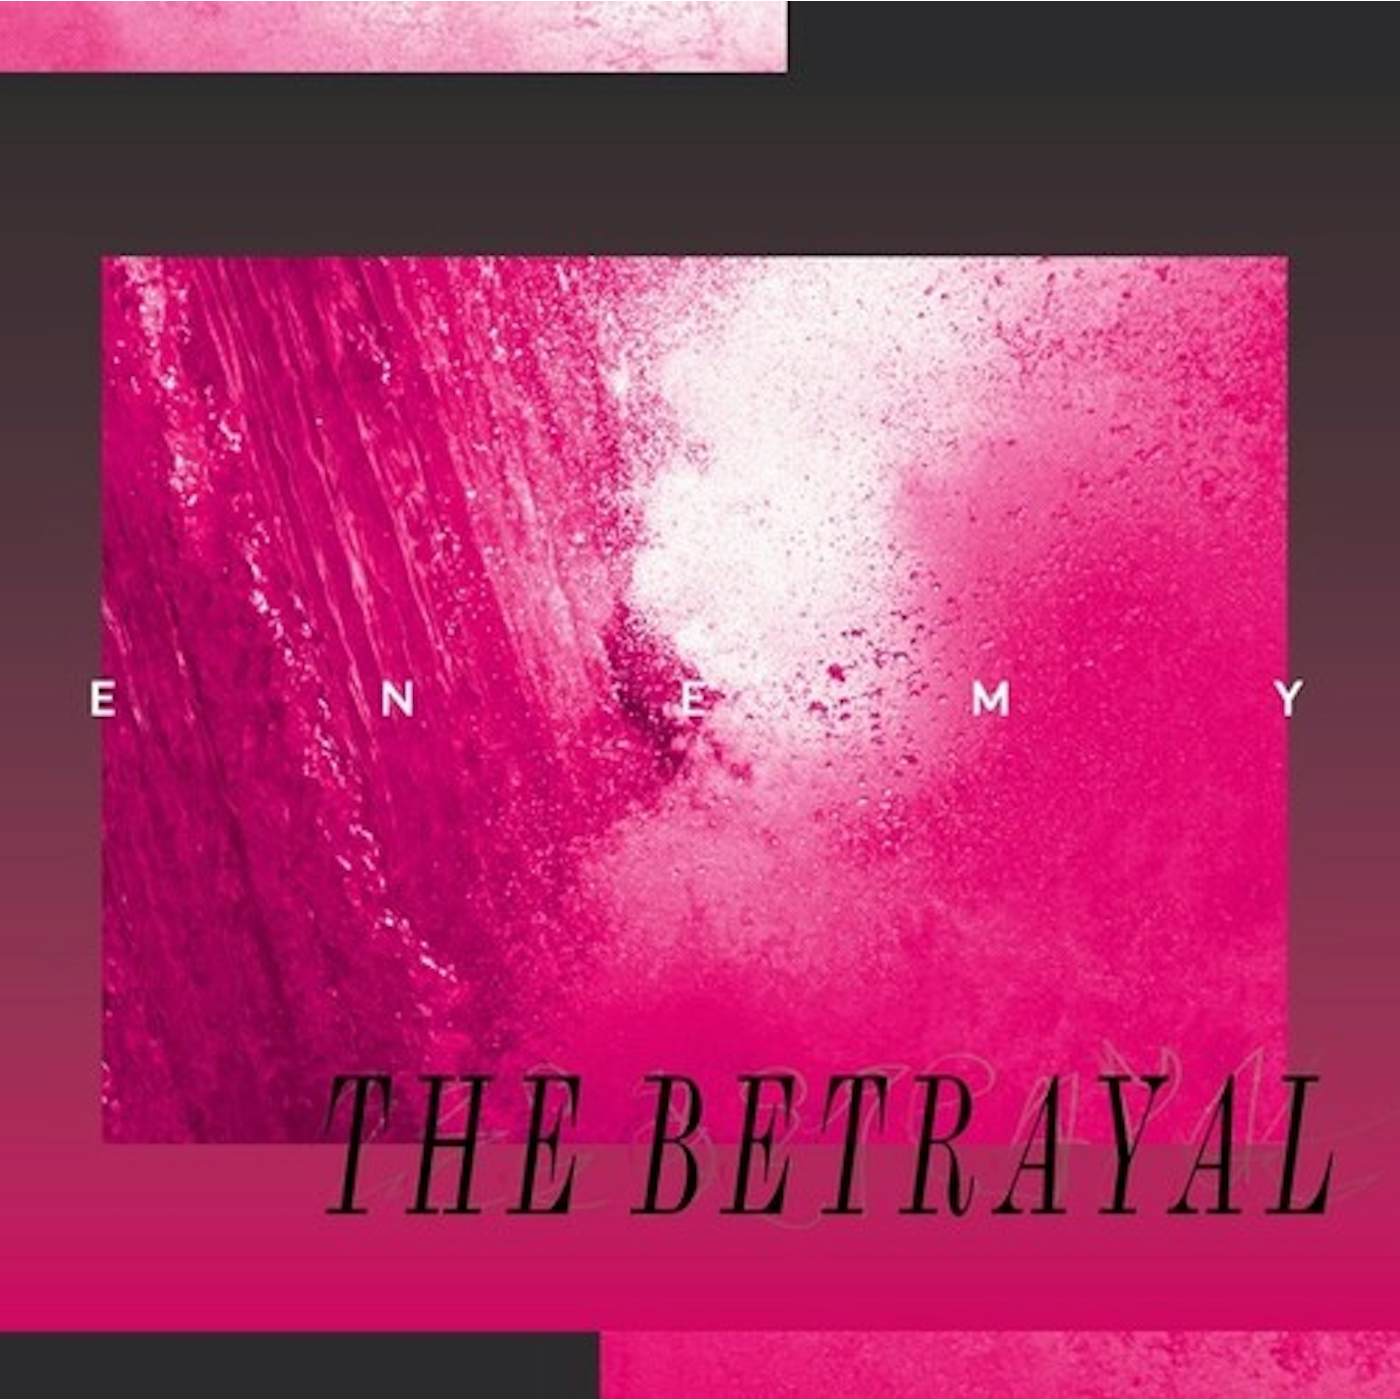 The Enemy BETRAYAL CD